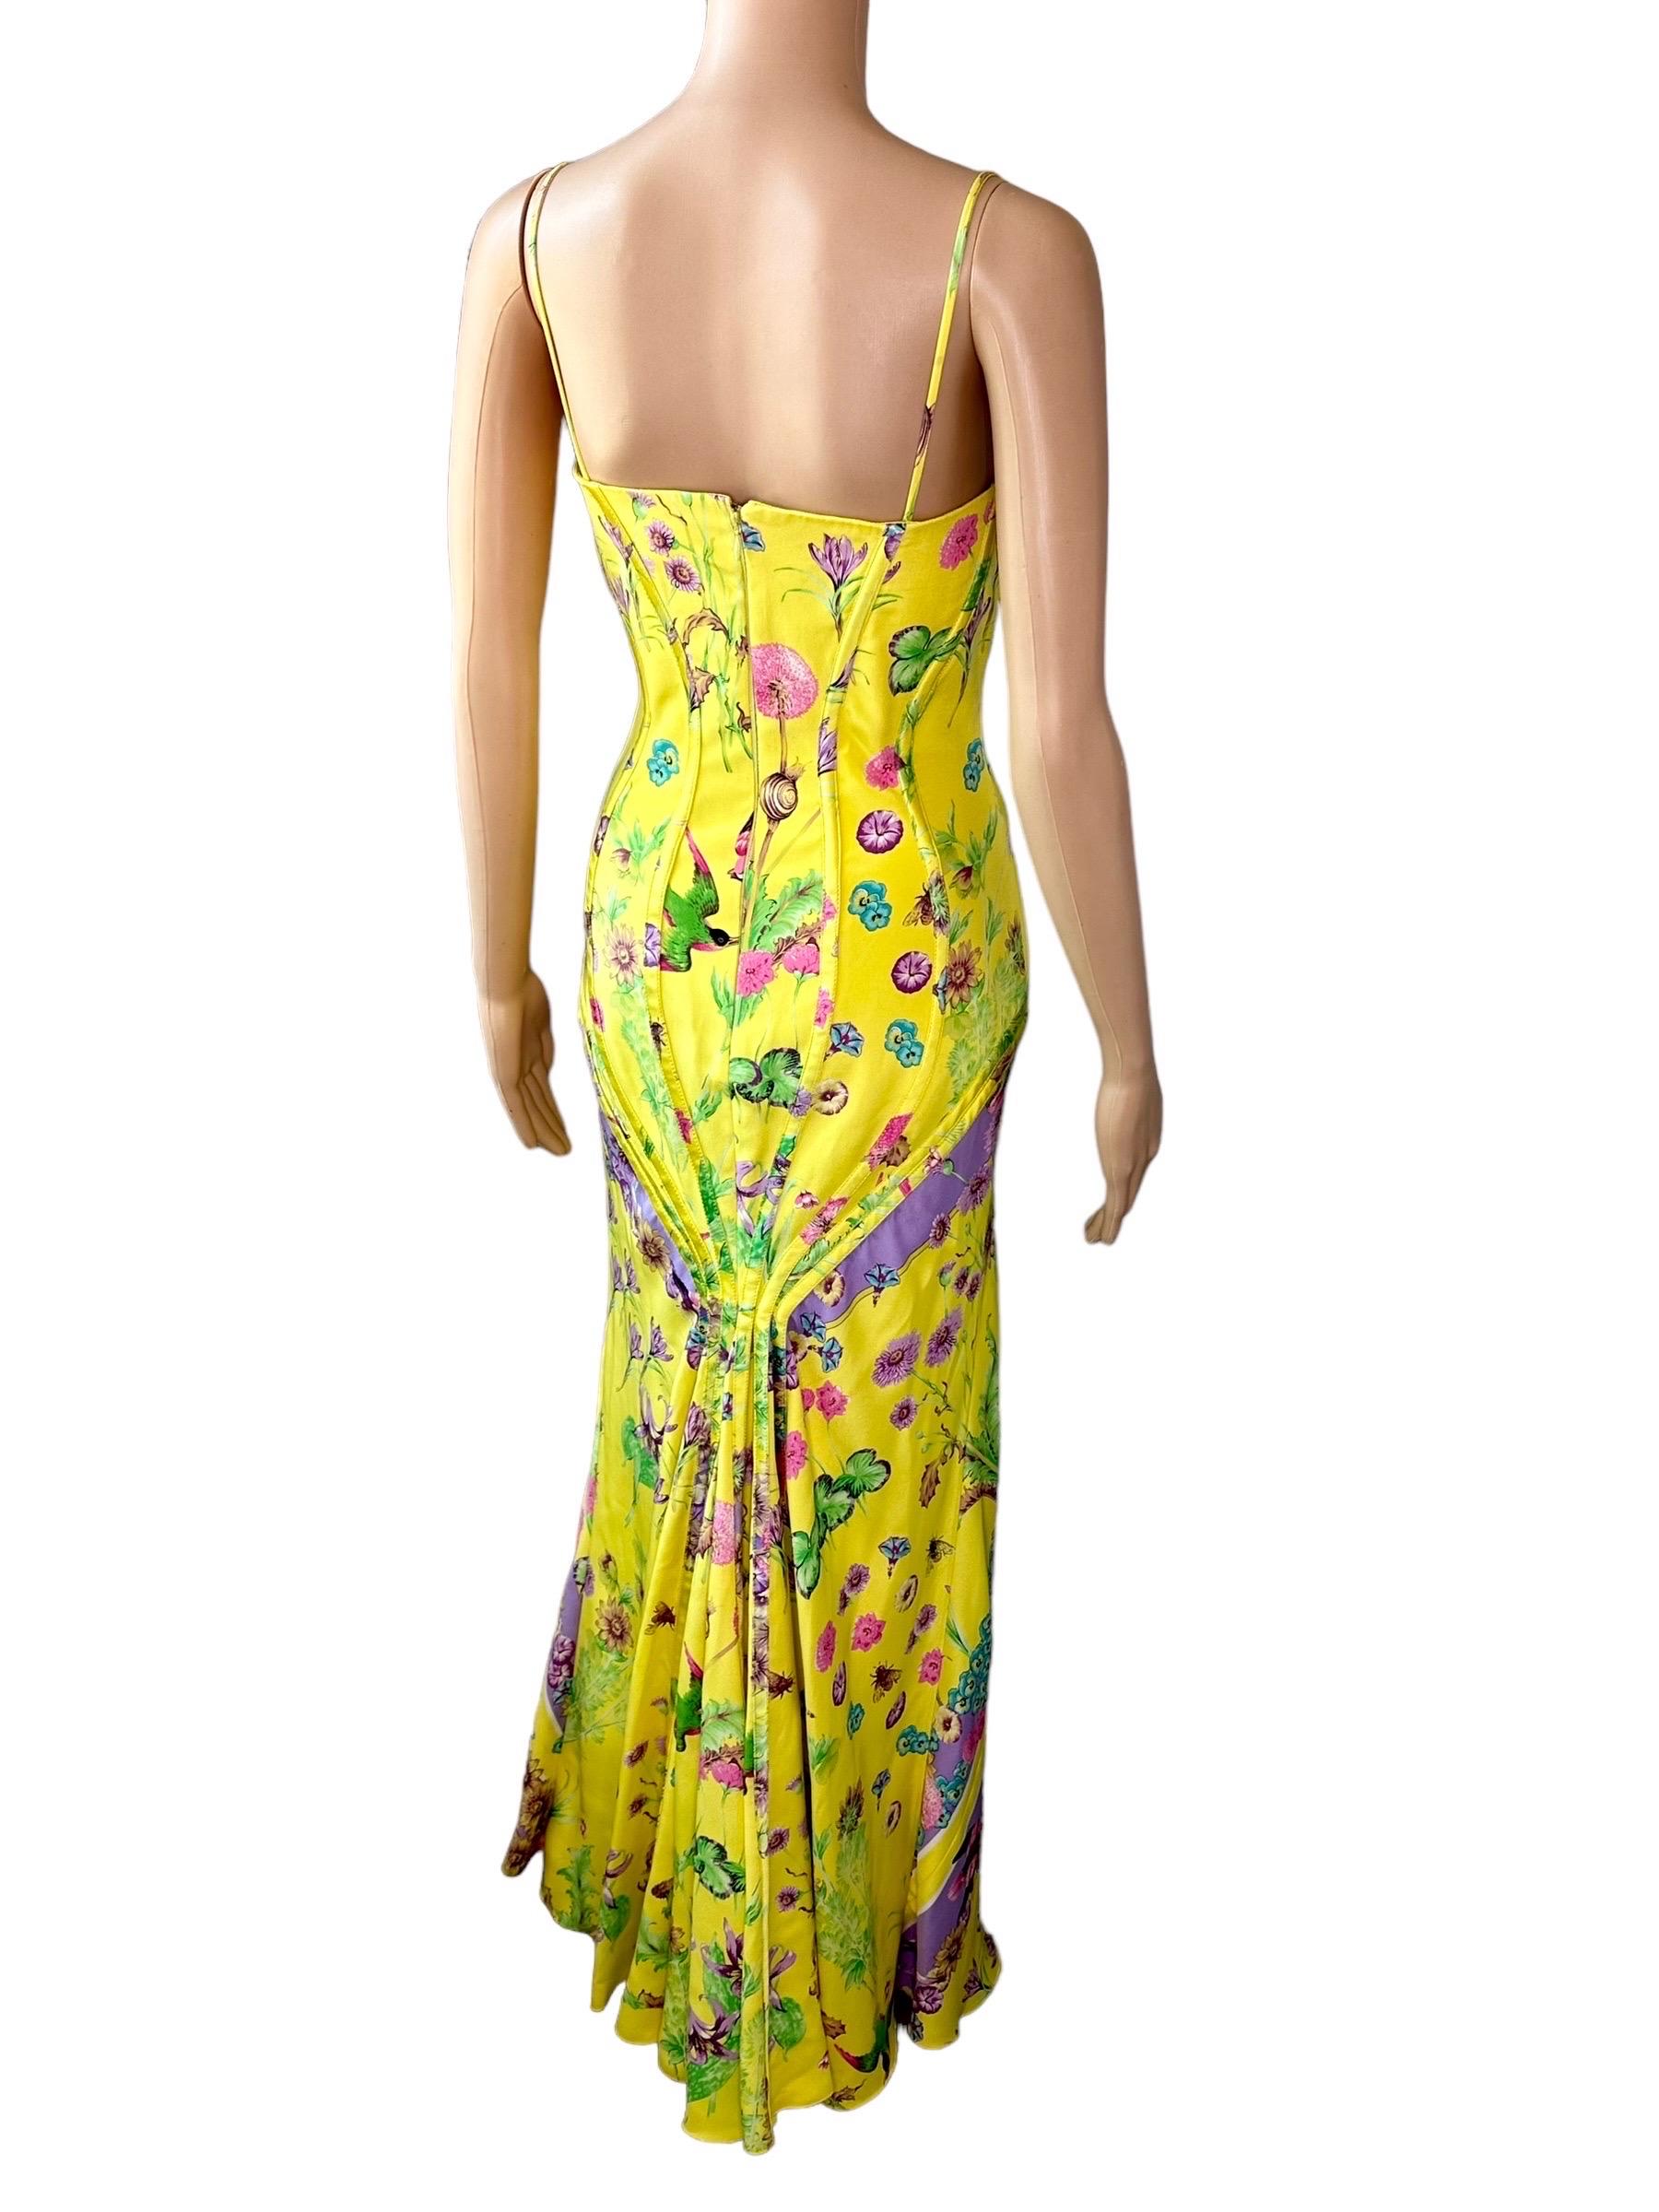 Versace S/S 2006 Bustier Corset Floral Print Evening Dress Gown For Sale 4